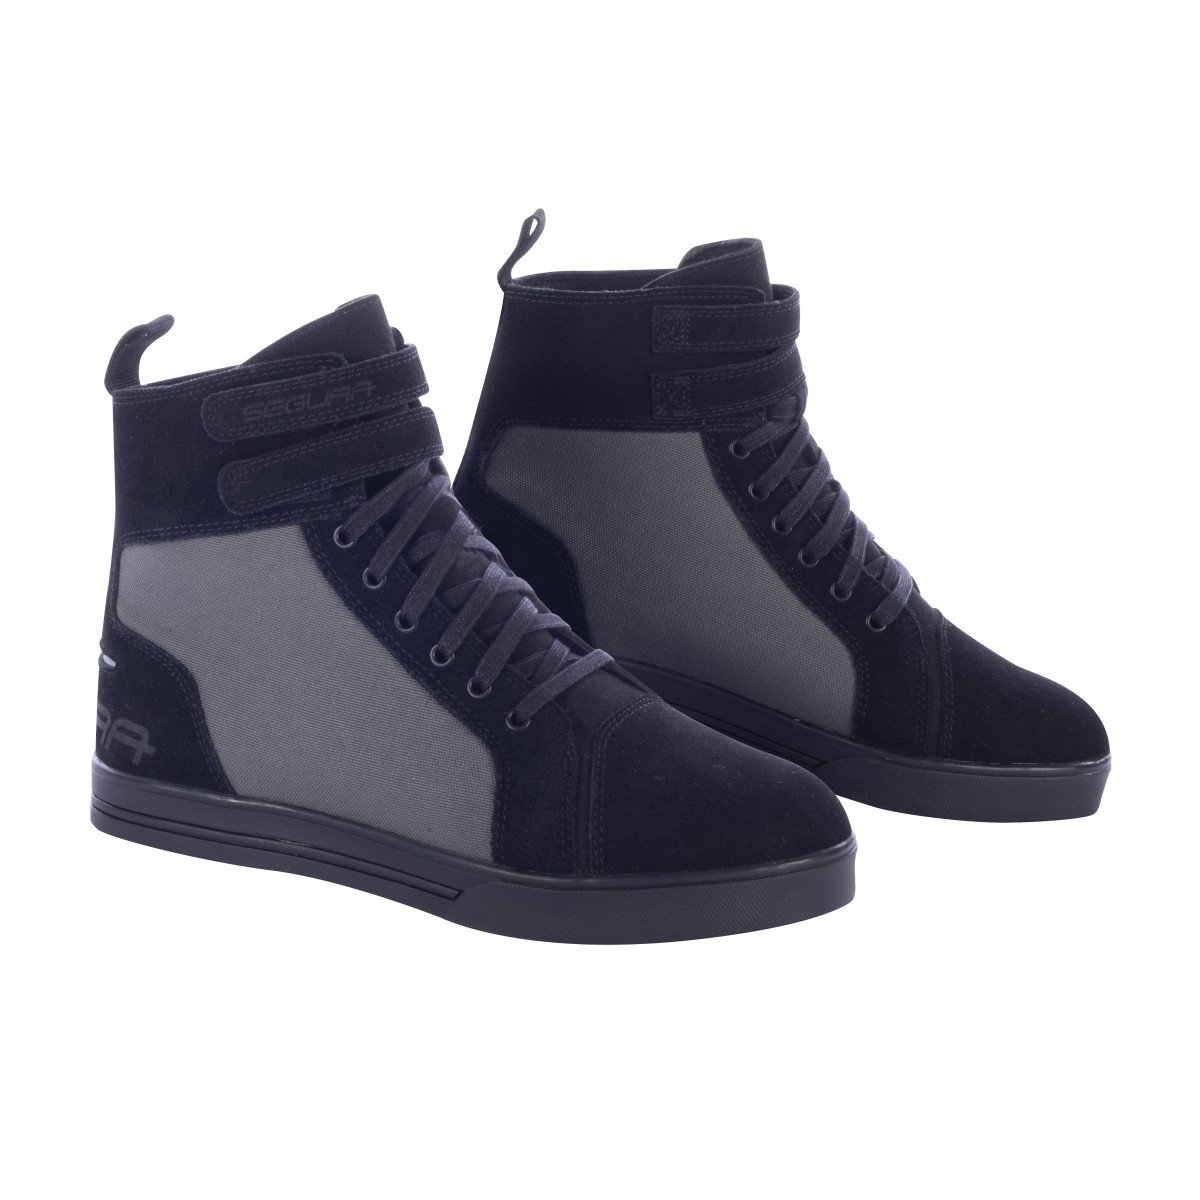 Image of Segura Sneakers Contact Black Grey Talla 45